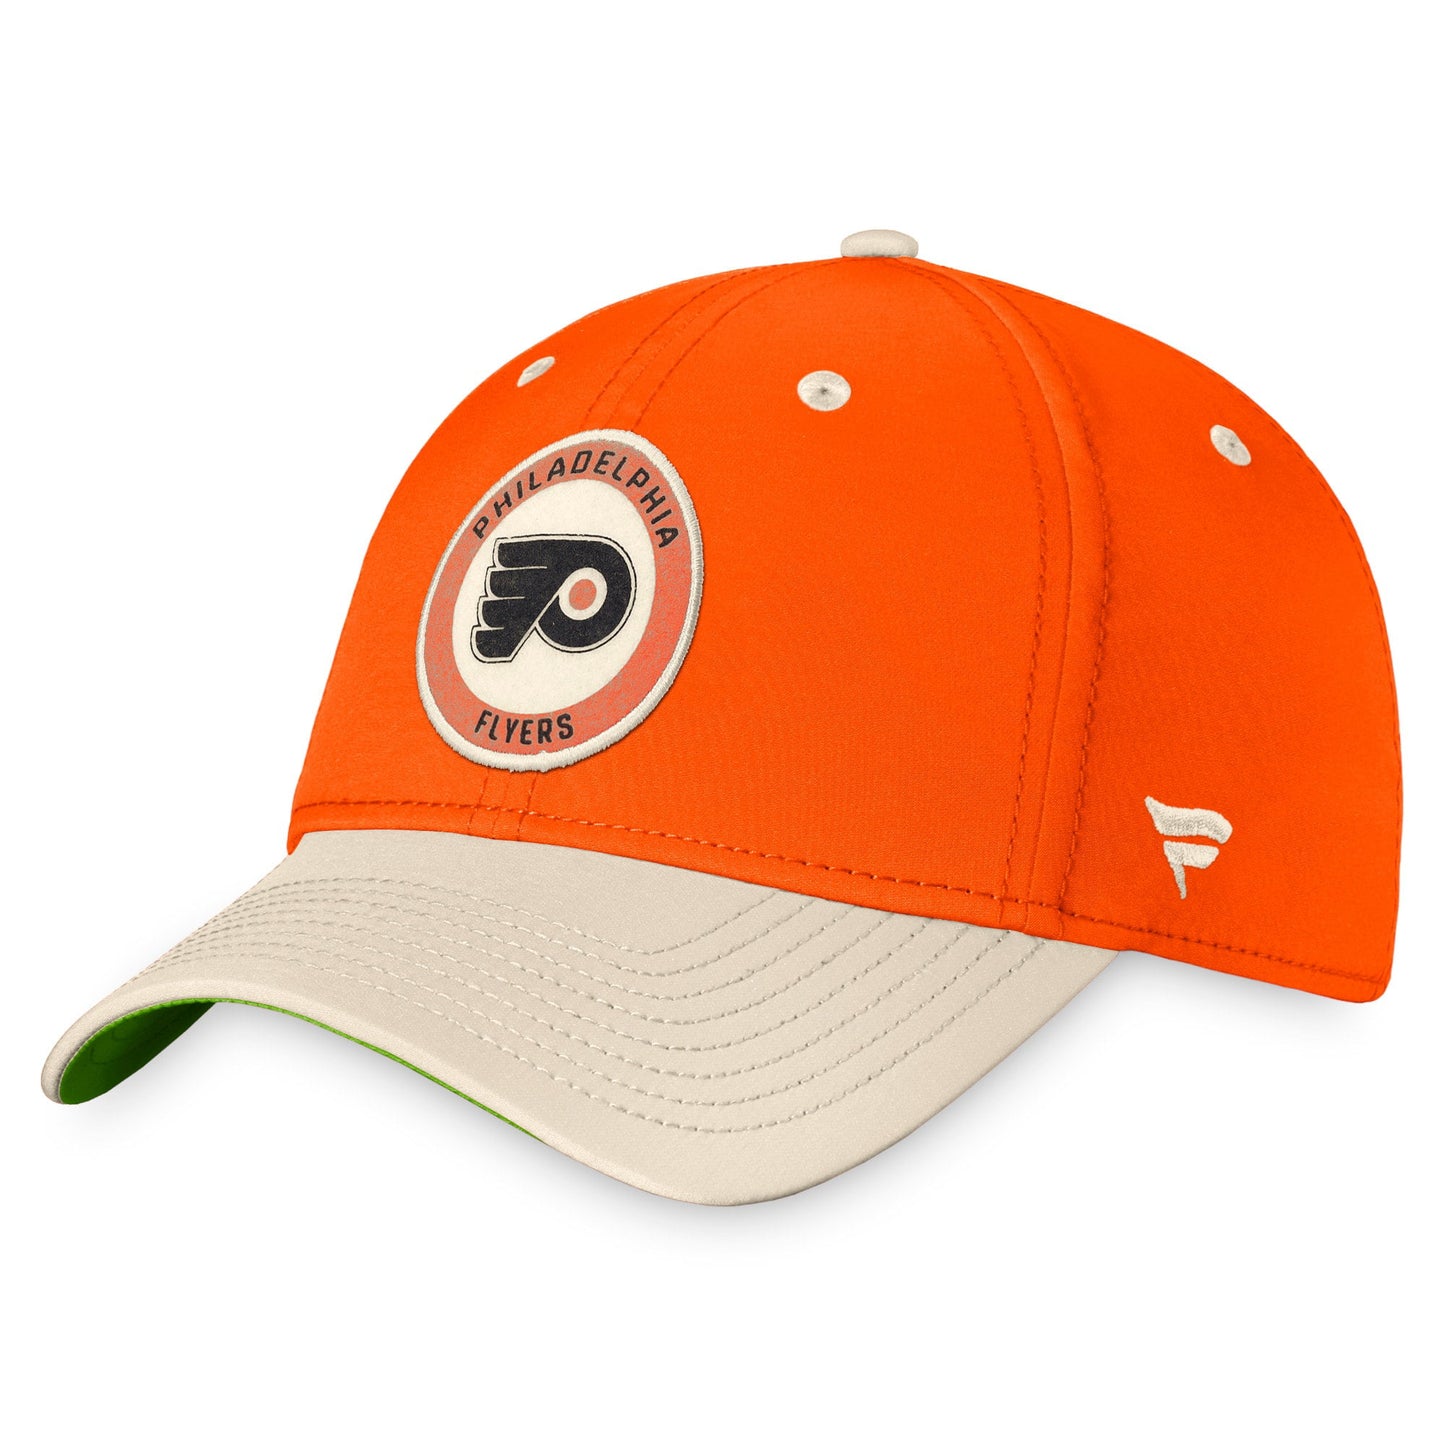 Men's Fanatics Branded Orange/Khaki Philadelphia Flyers True Classics Retro Flex Hat